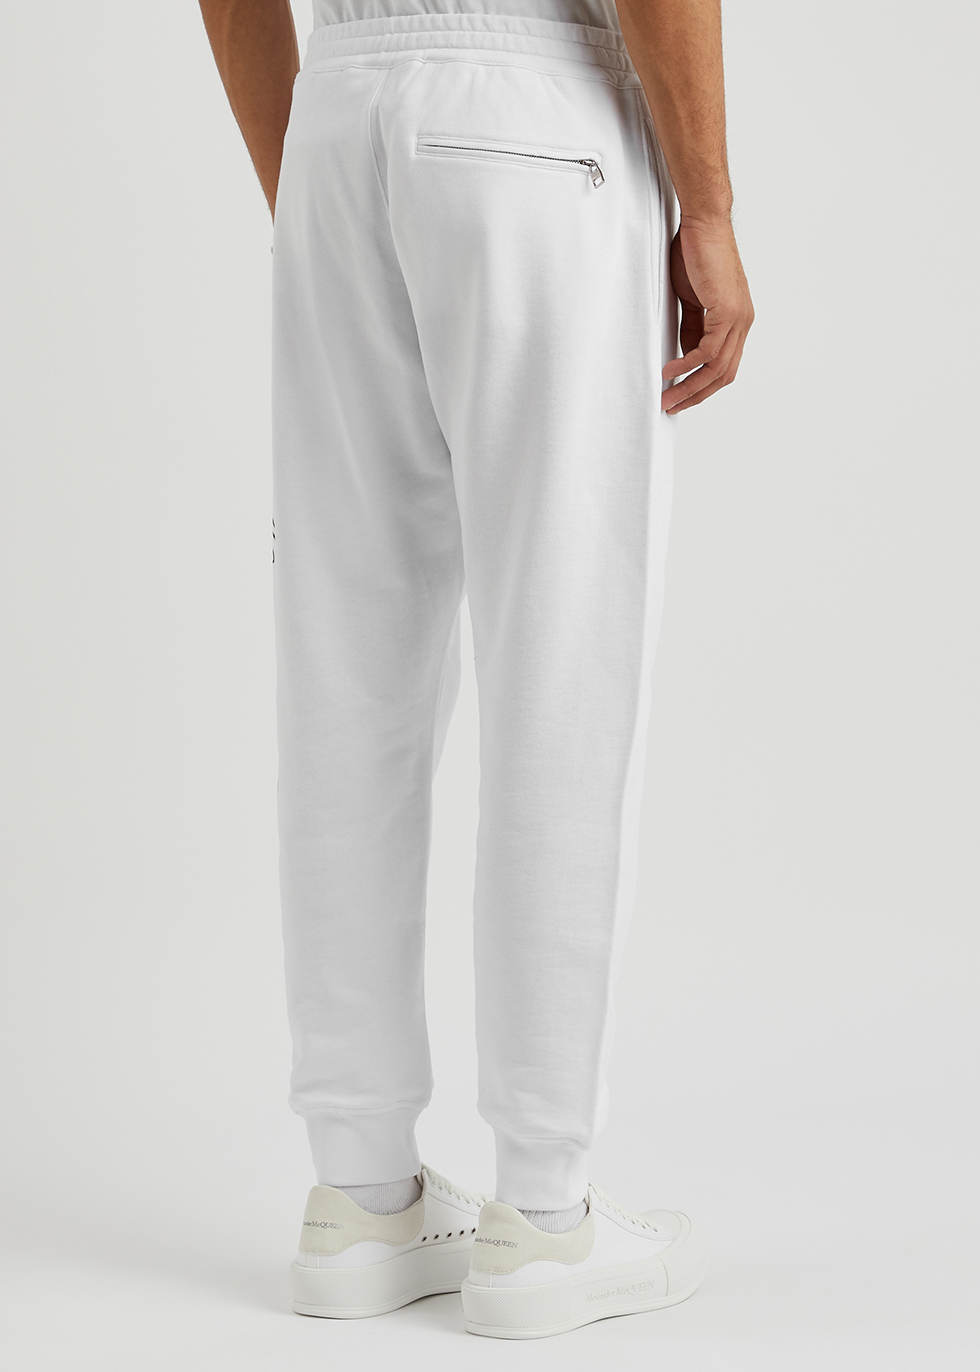 Alexander McQueen White logo cotton sweatpants - Harvey Nichols